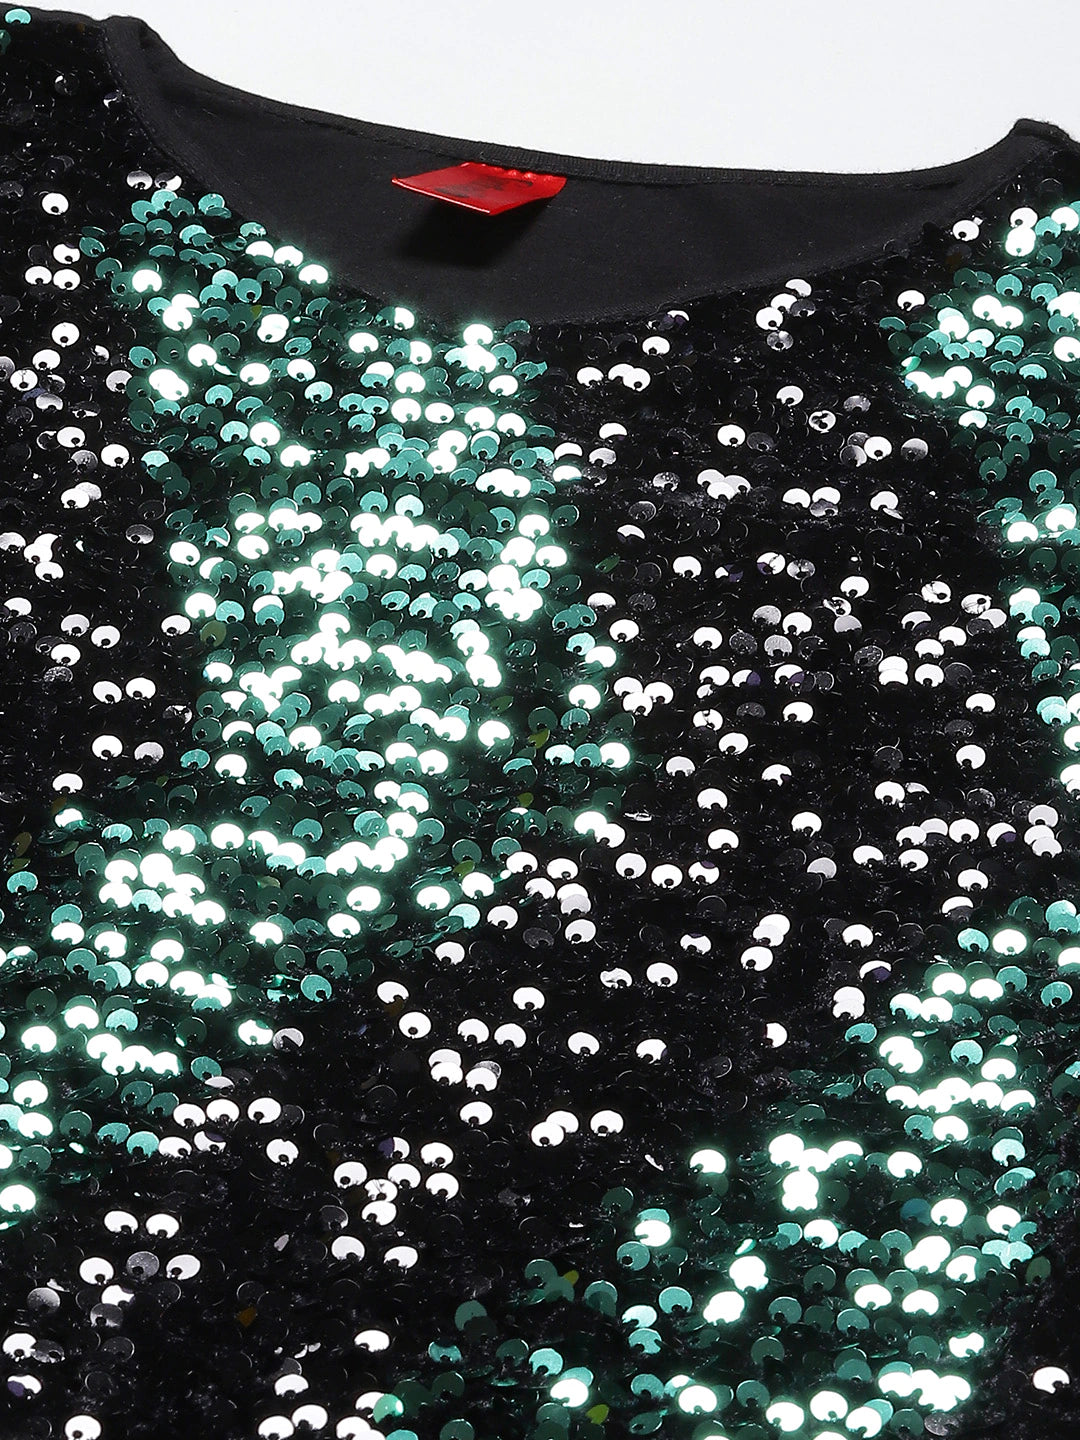 Cottinfab Black & Green Sequined Sheath Midi Dress with Slit Detail